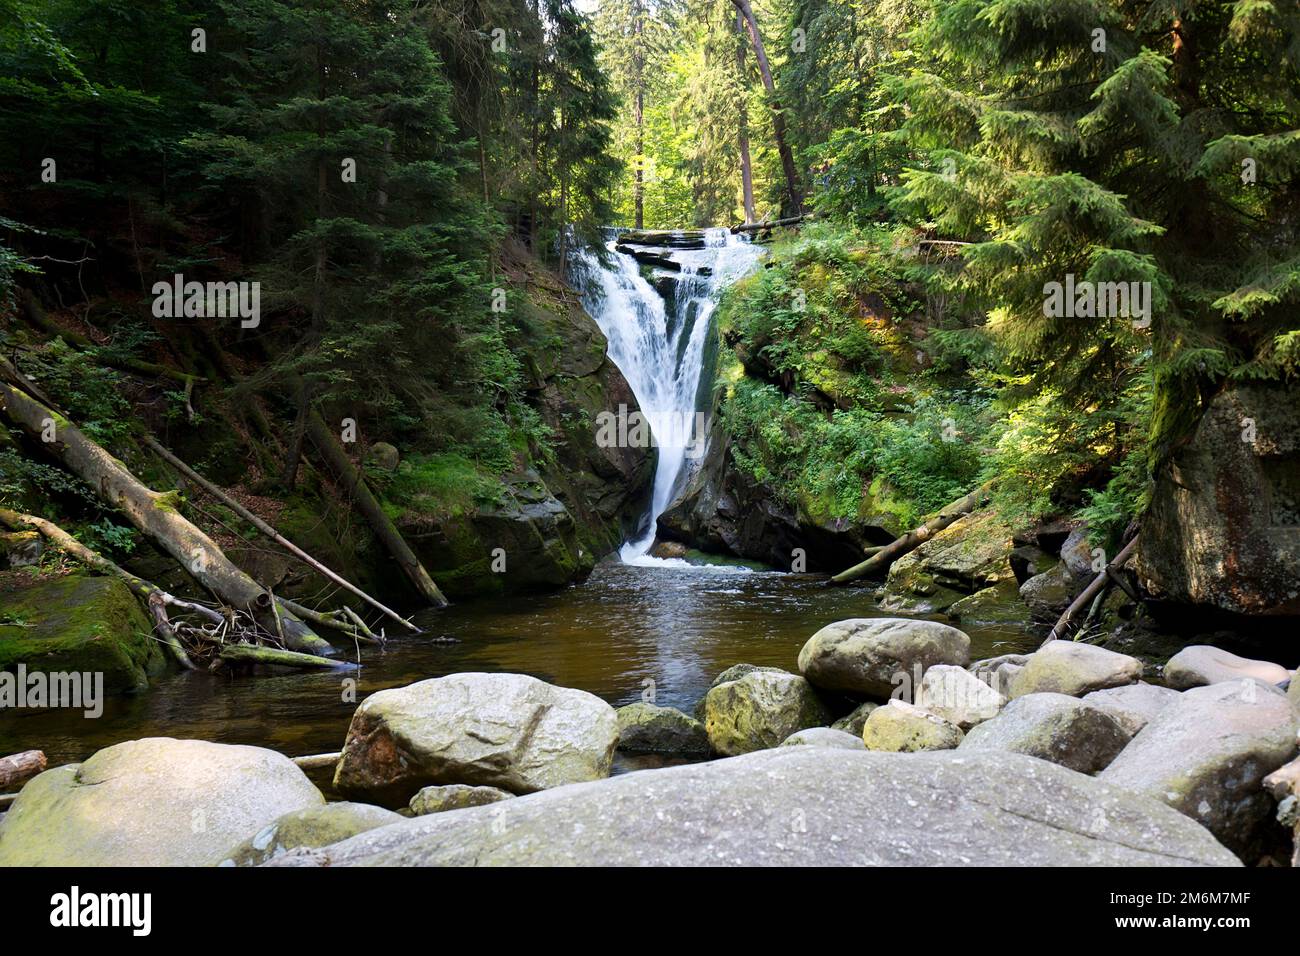 Szklarka Waterfall in the Karkonosze Mountains in Poland Stock Photo